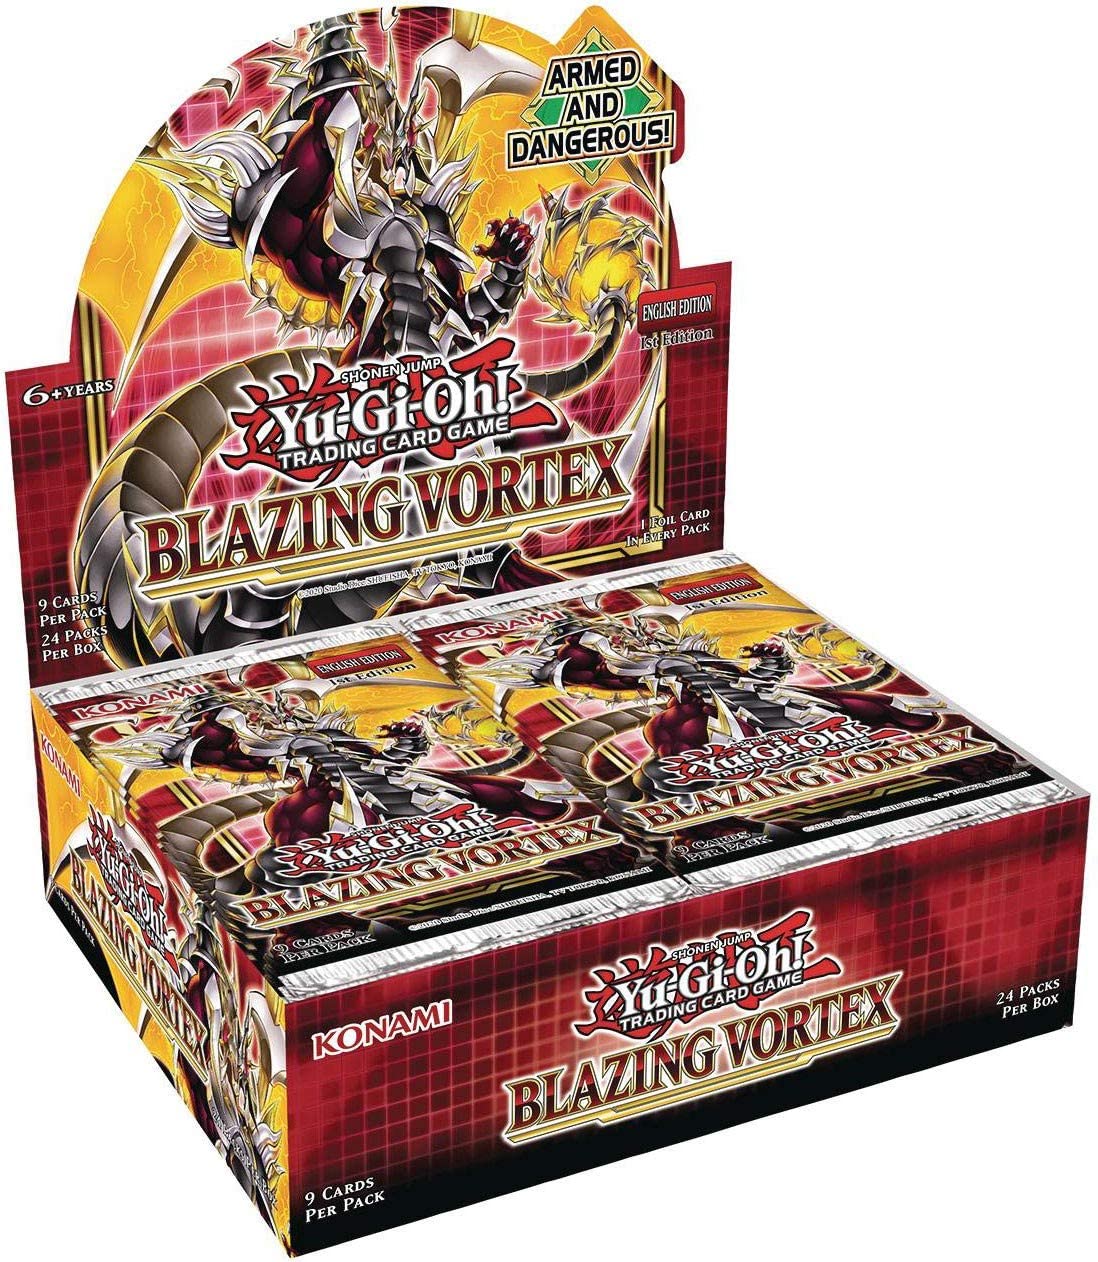 Yu Gi Oh! Blazing Vortex English 1st Edition Booster Box - Miraj Trading